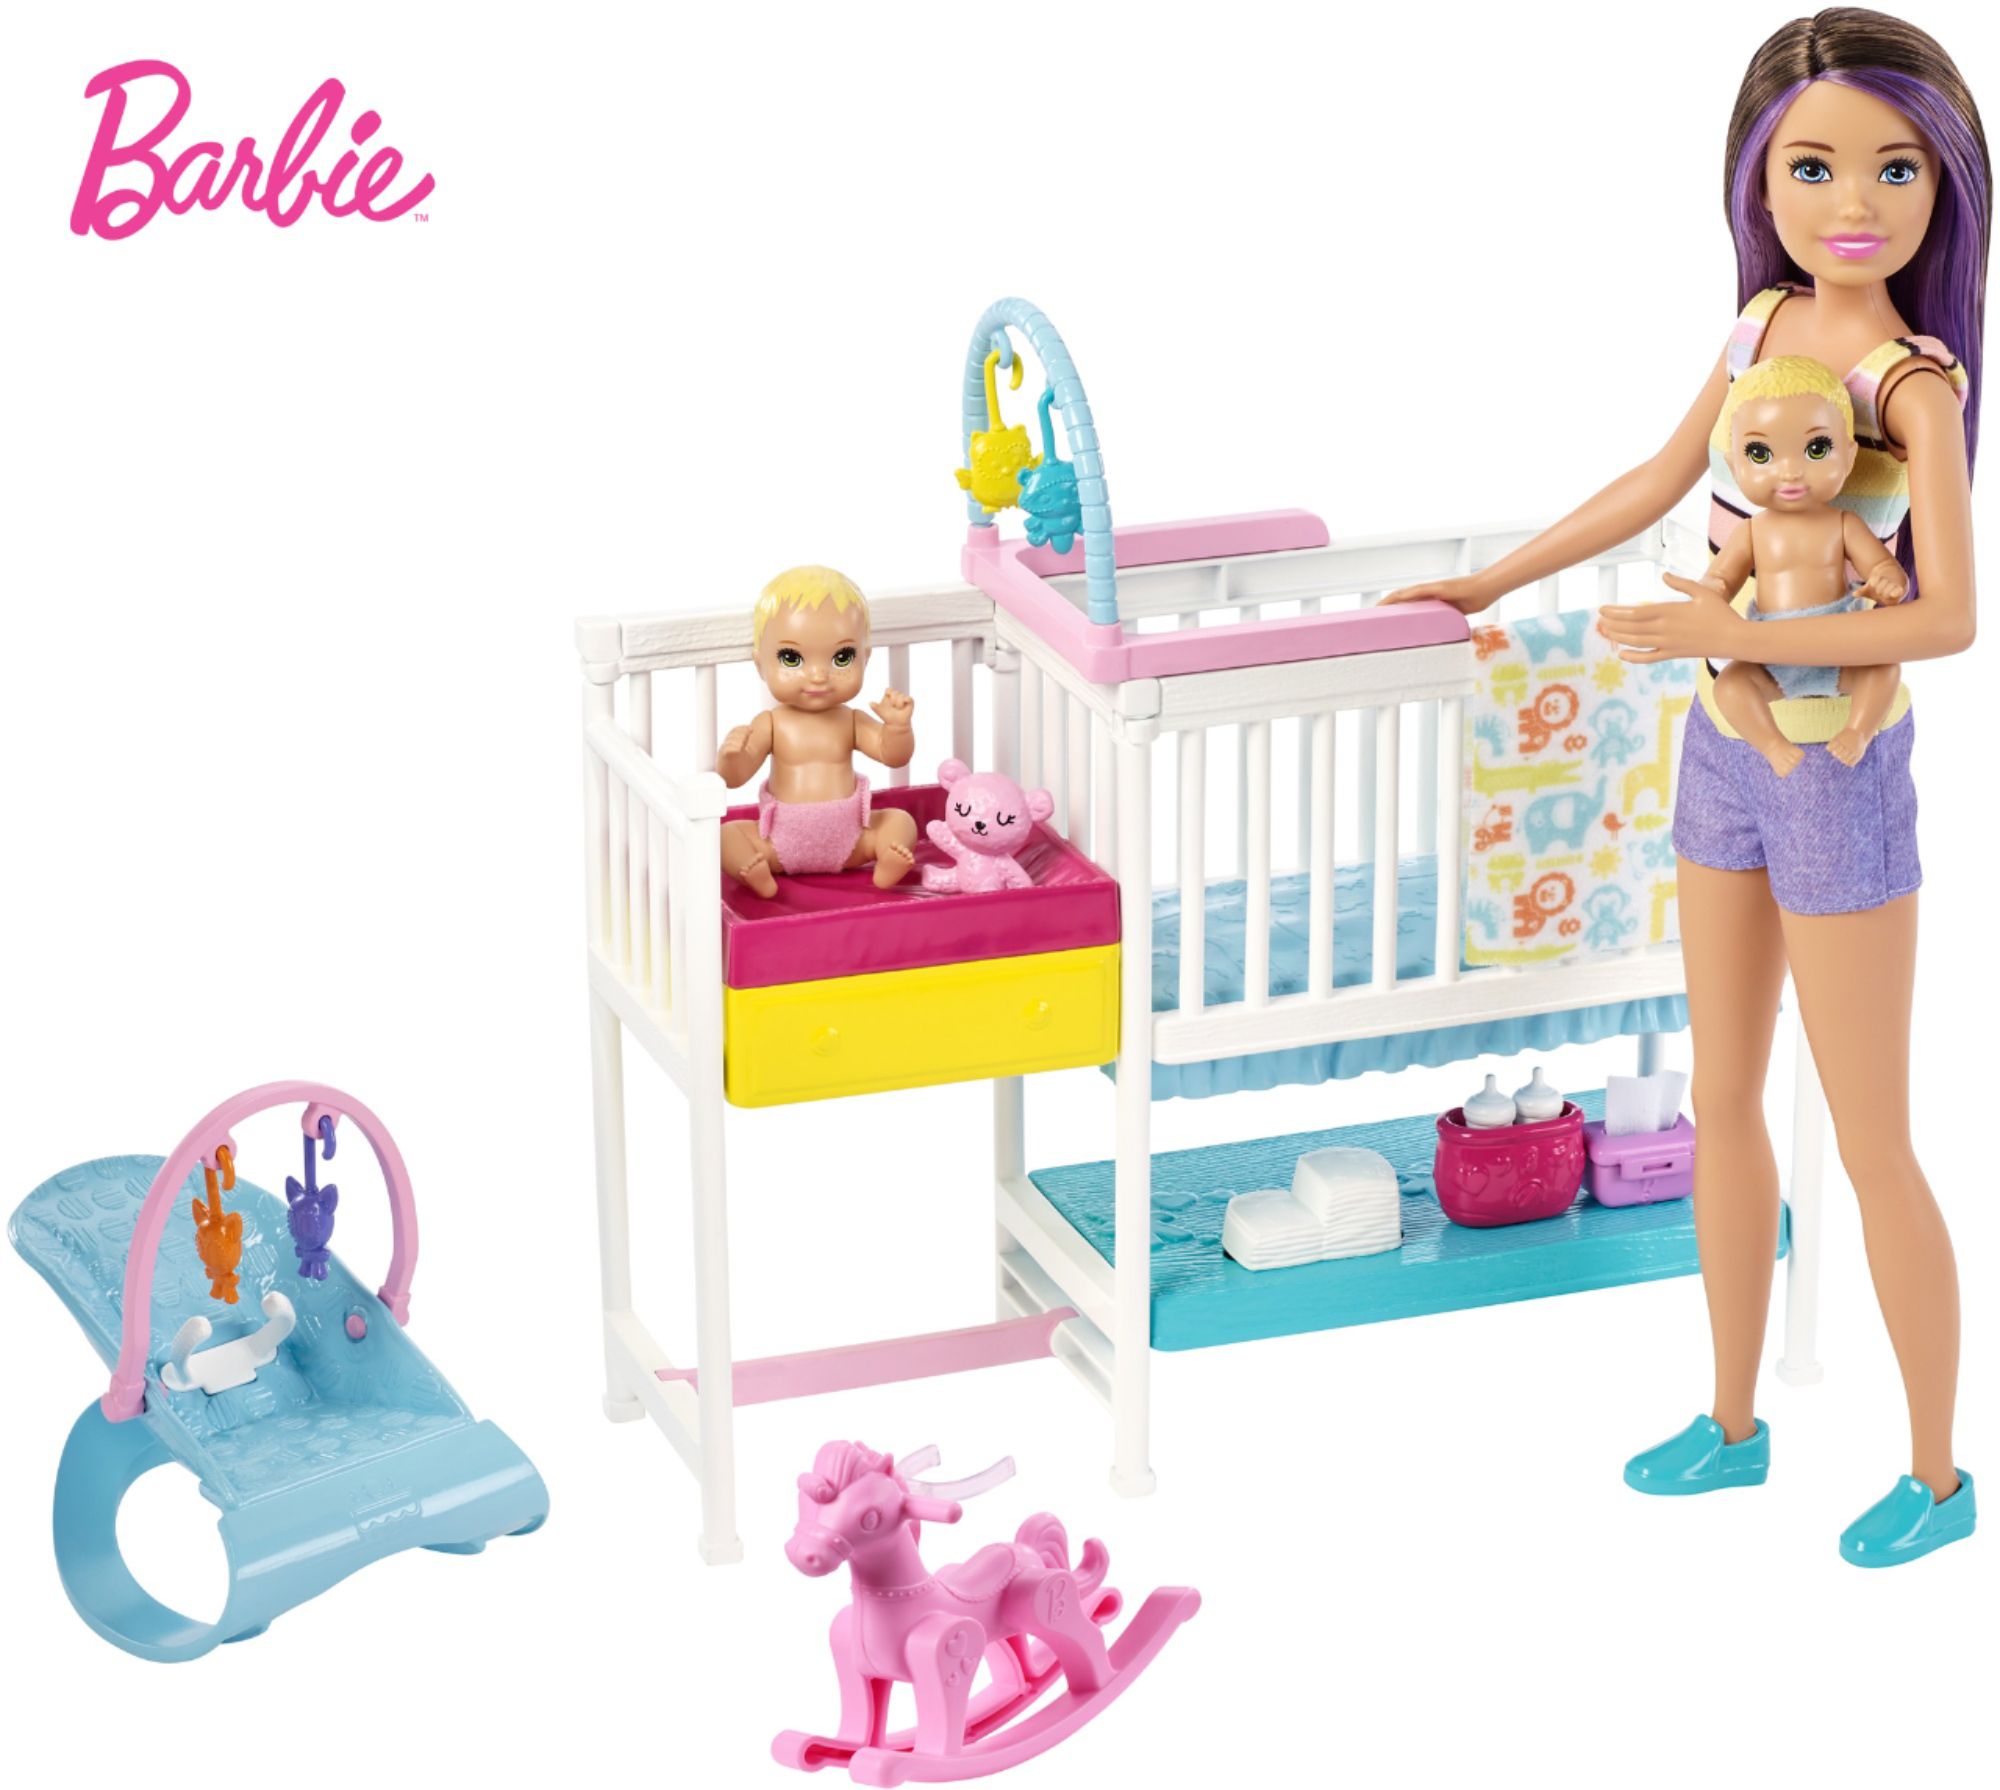 barbie skipper babysitter